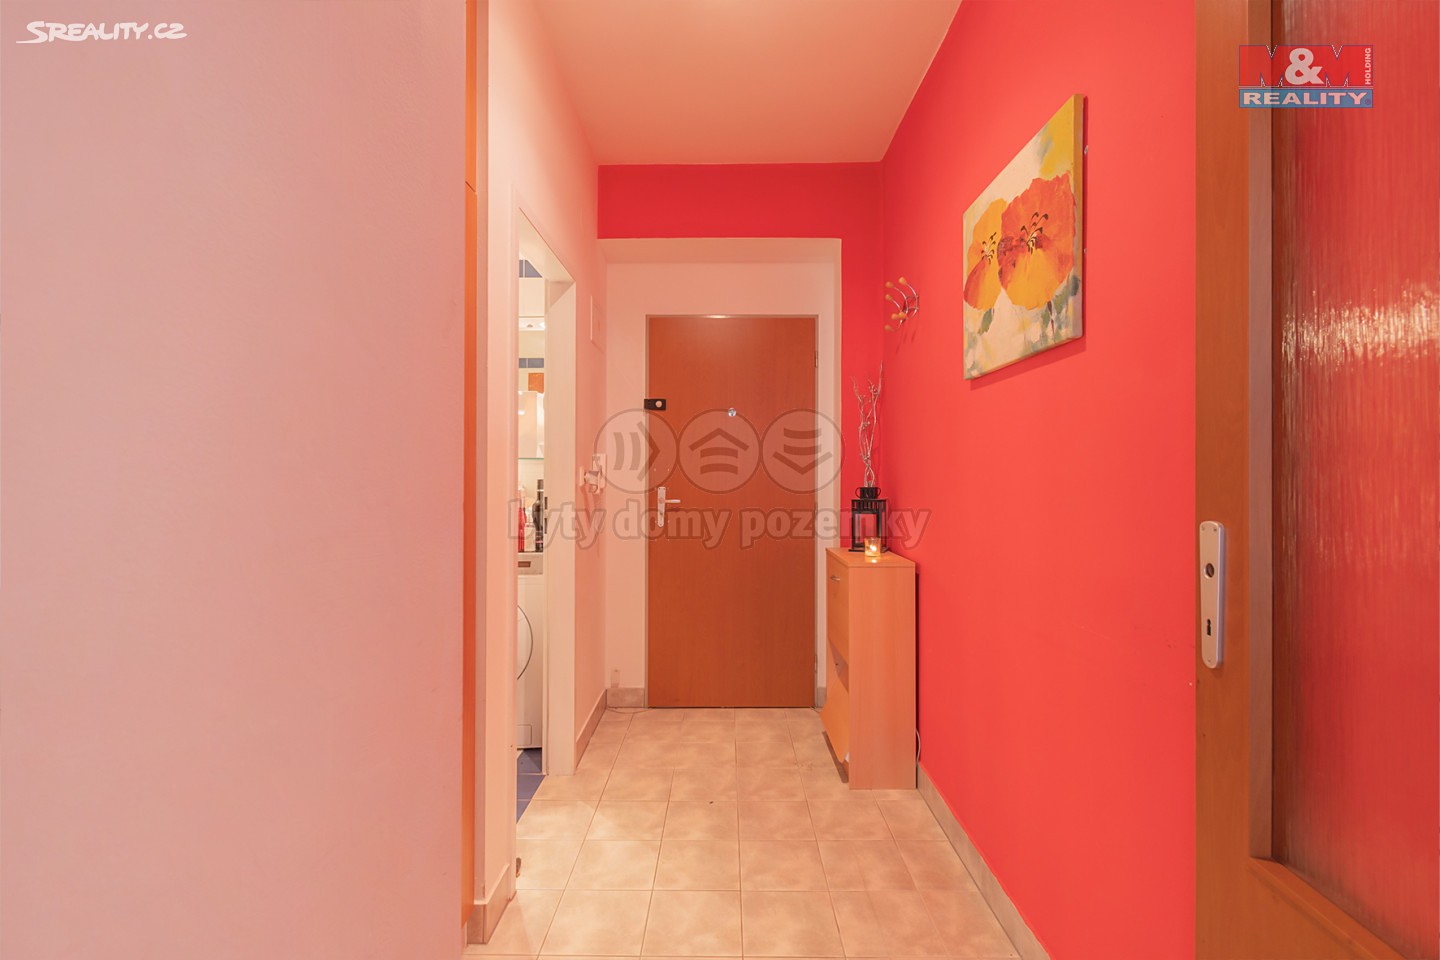 Pronájem bytu 1+kk 33 m², Jeronýmova, Liberec - Liberec VII-Horní Růžodol